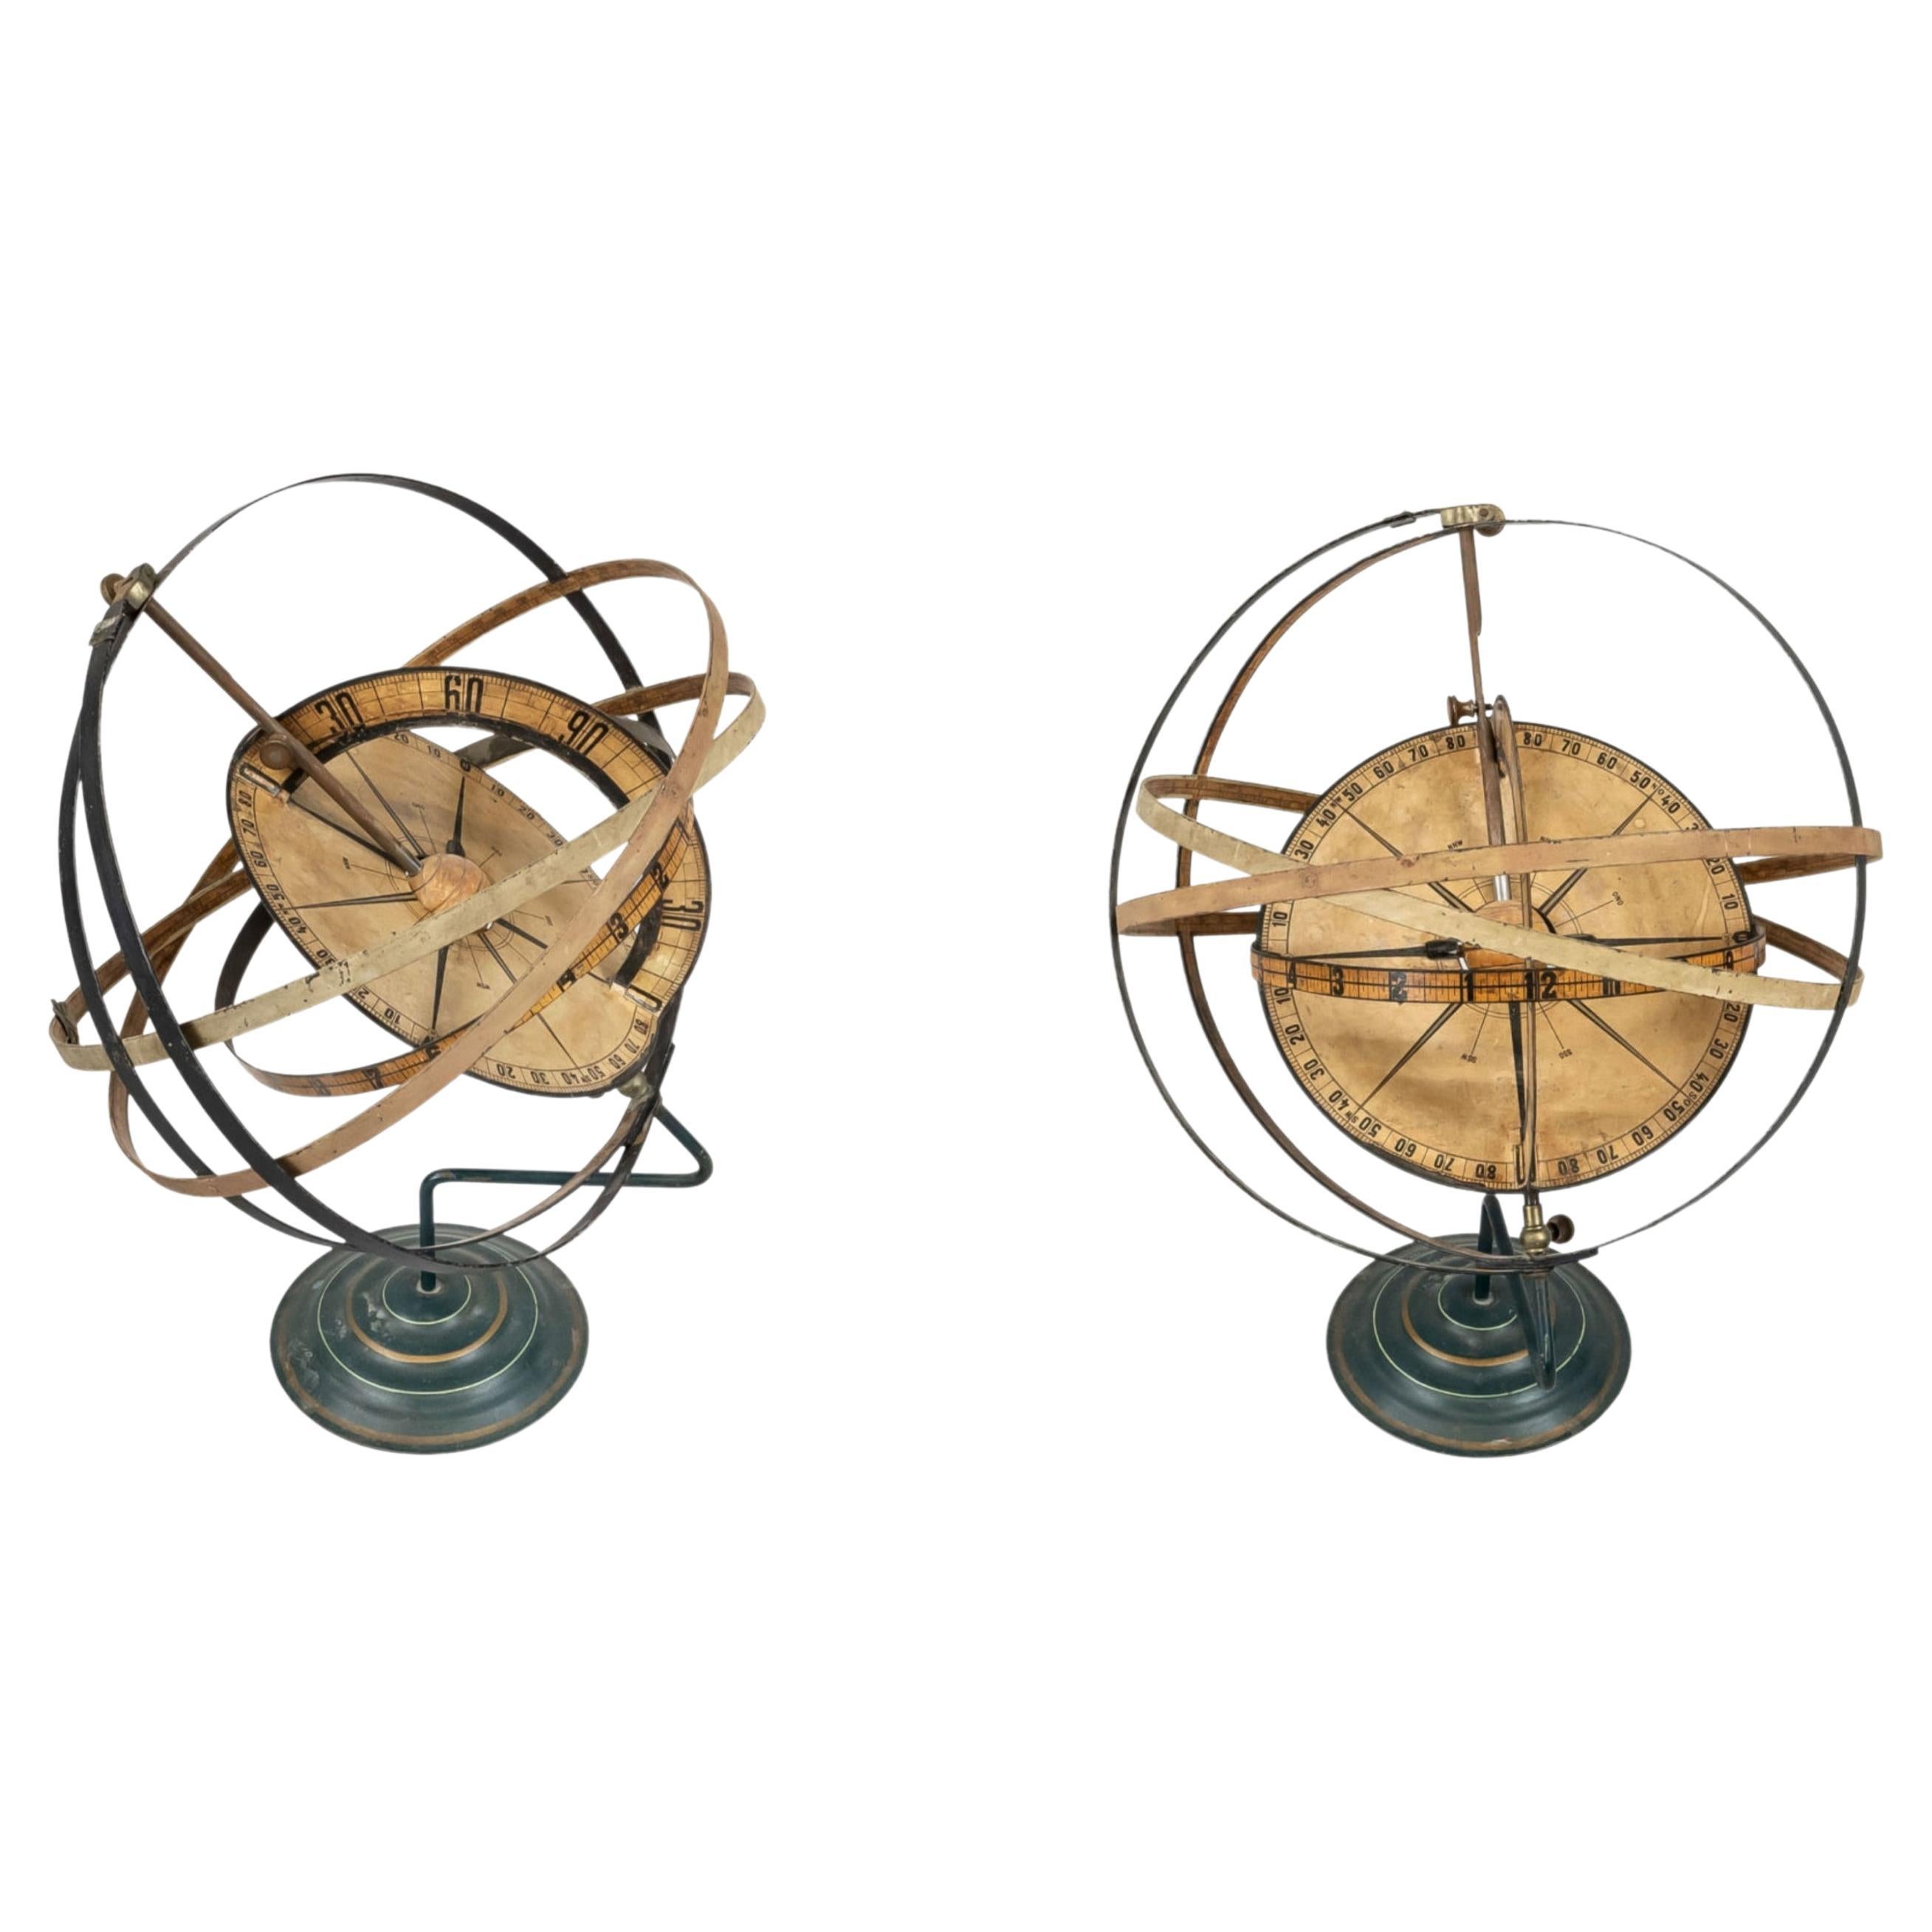 Rare Italian Armillary Sphere/Spherical Astrolabe, Late 18th/Early 19th Century